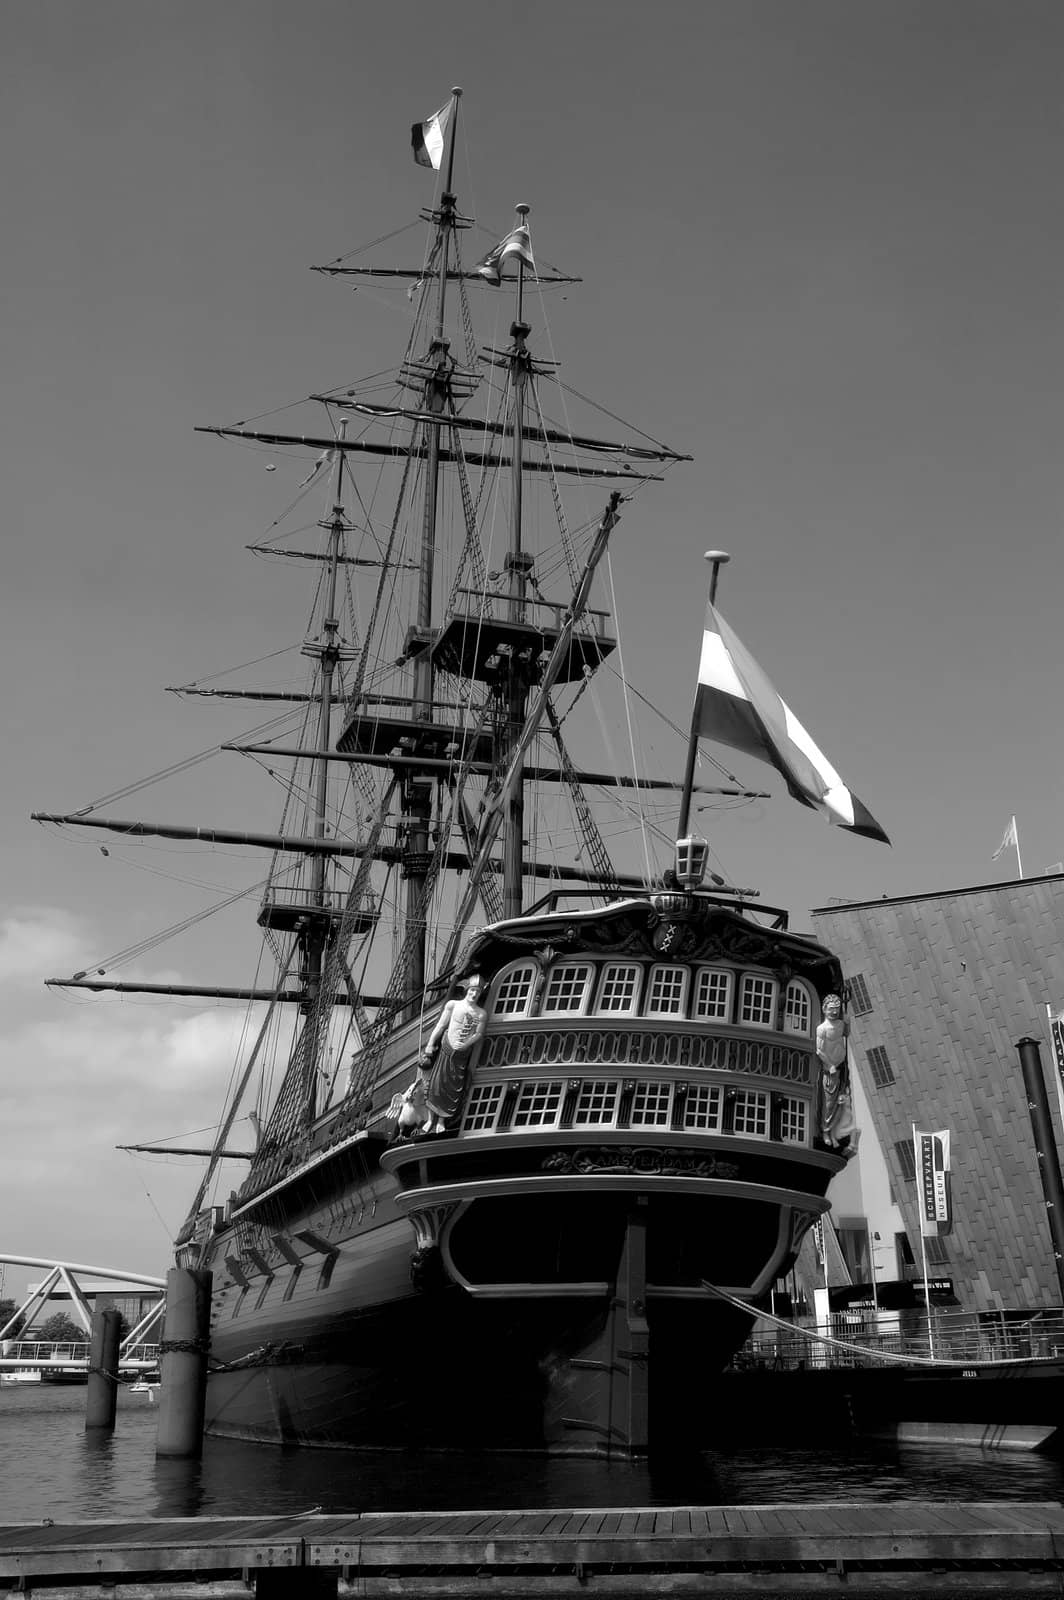 Historic ship in Amsterdam maritime museum.